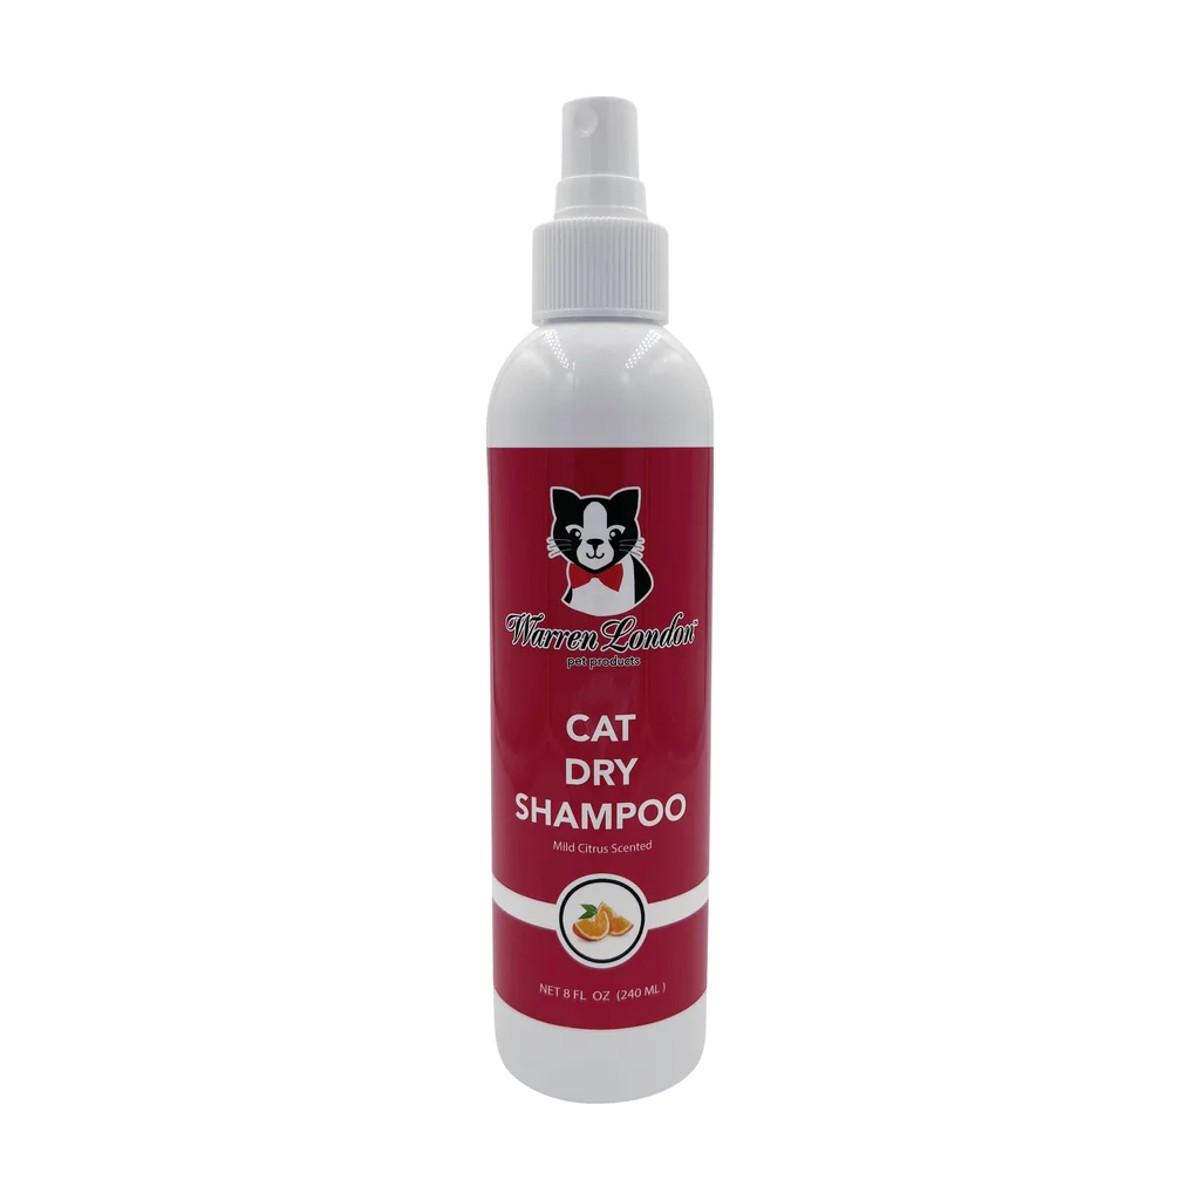 Warren London Cat Dry Shampoo Spray - Citrus